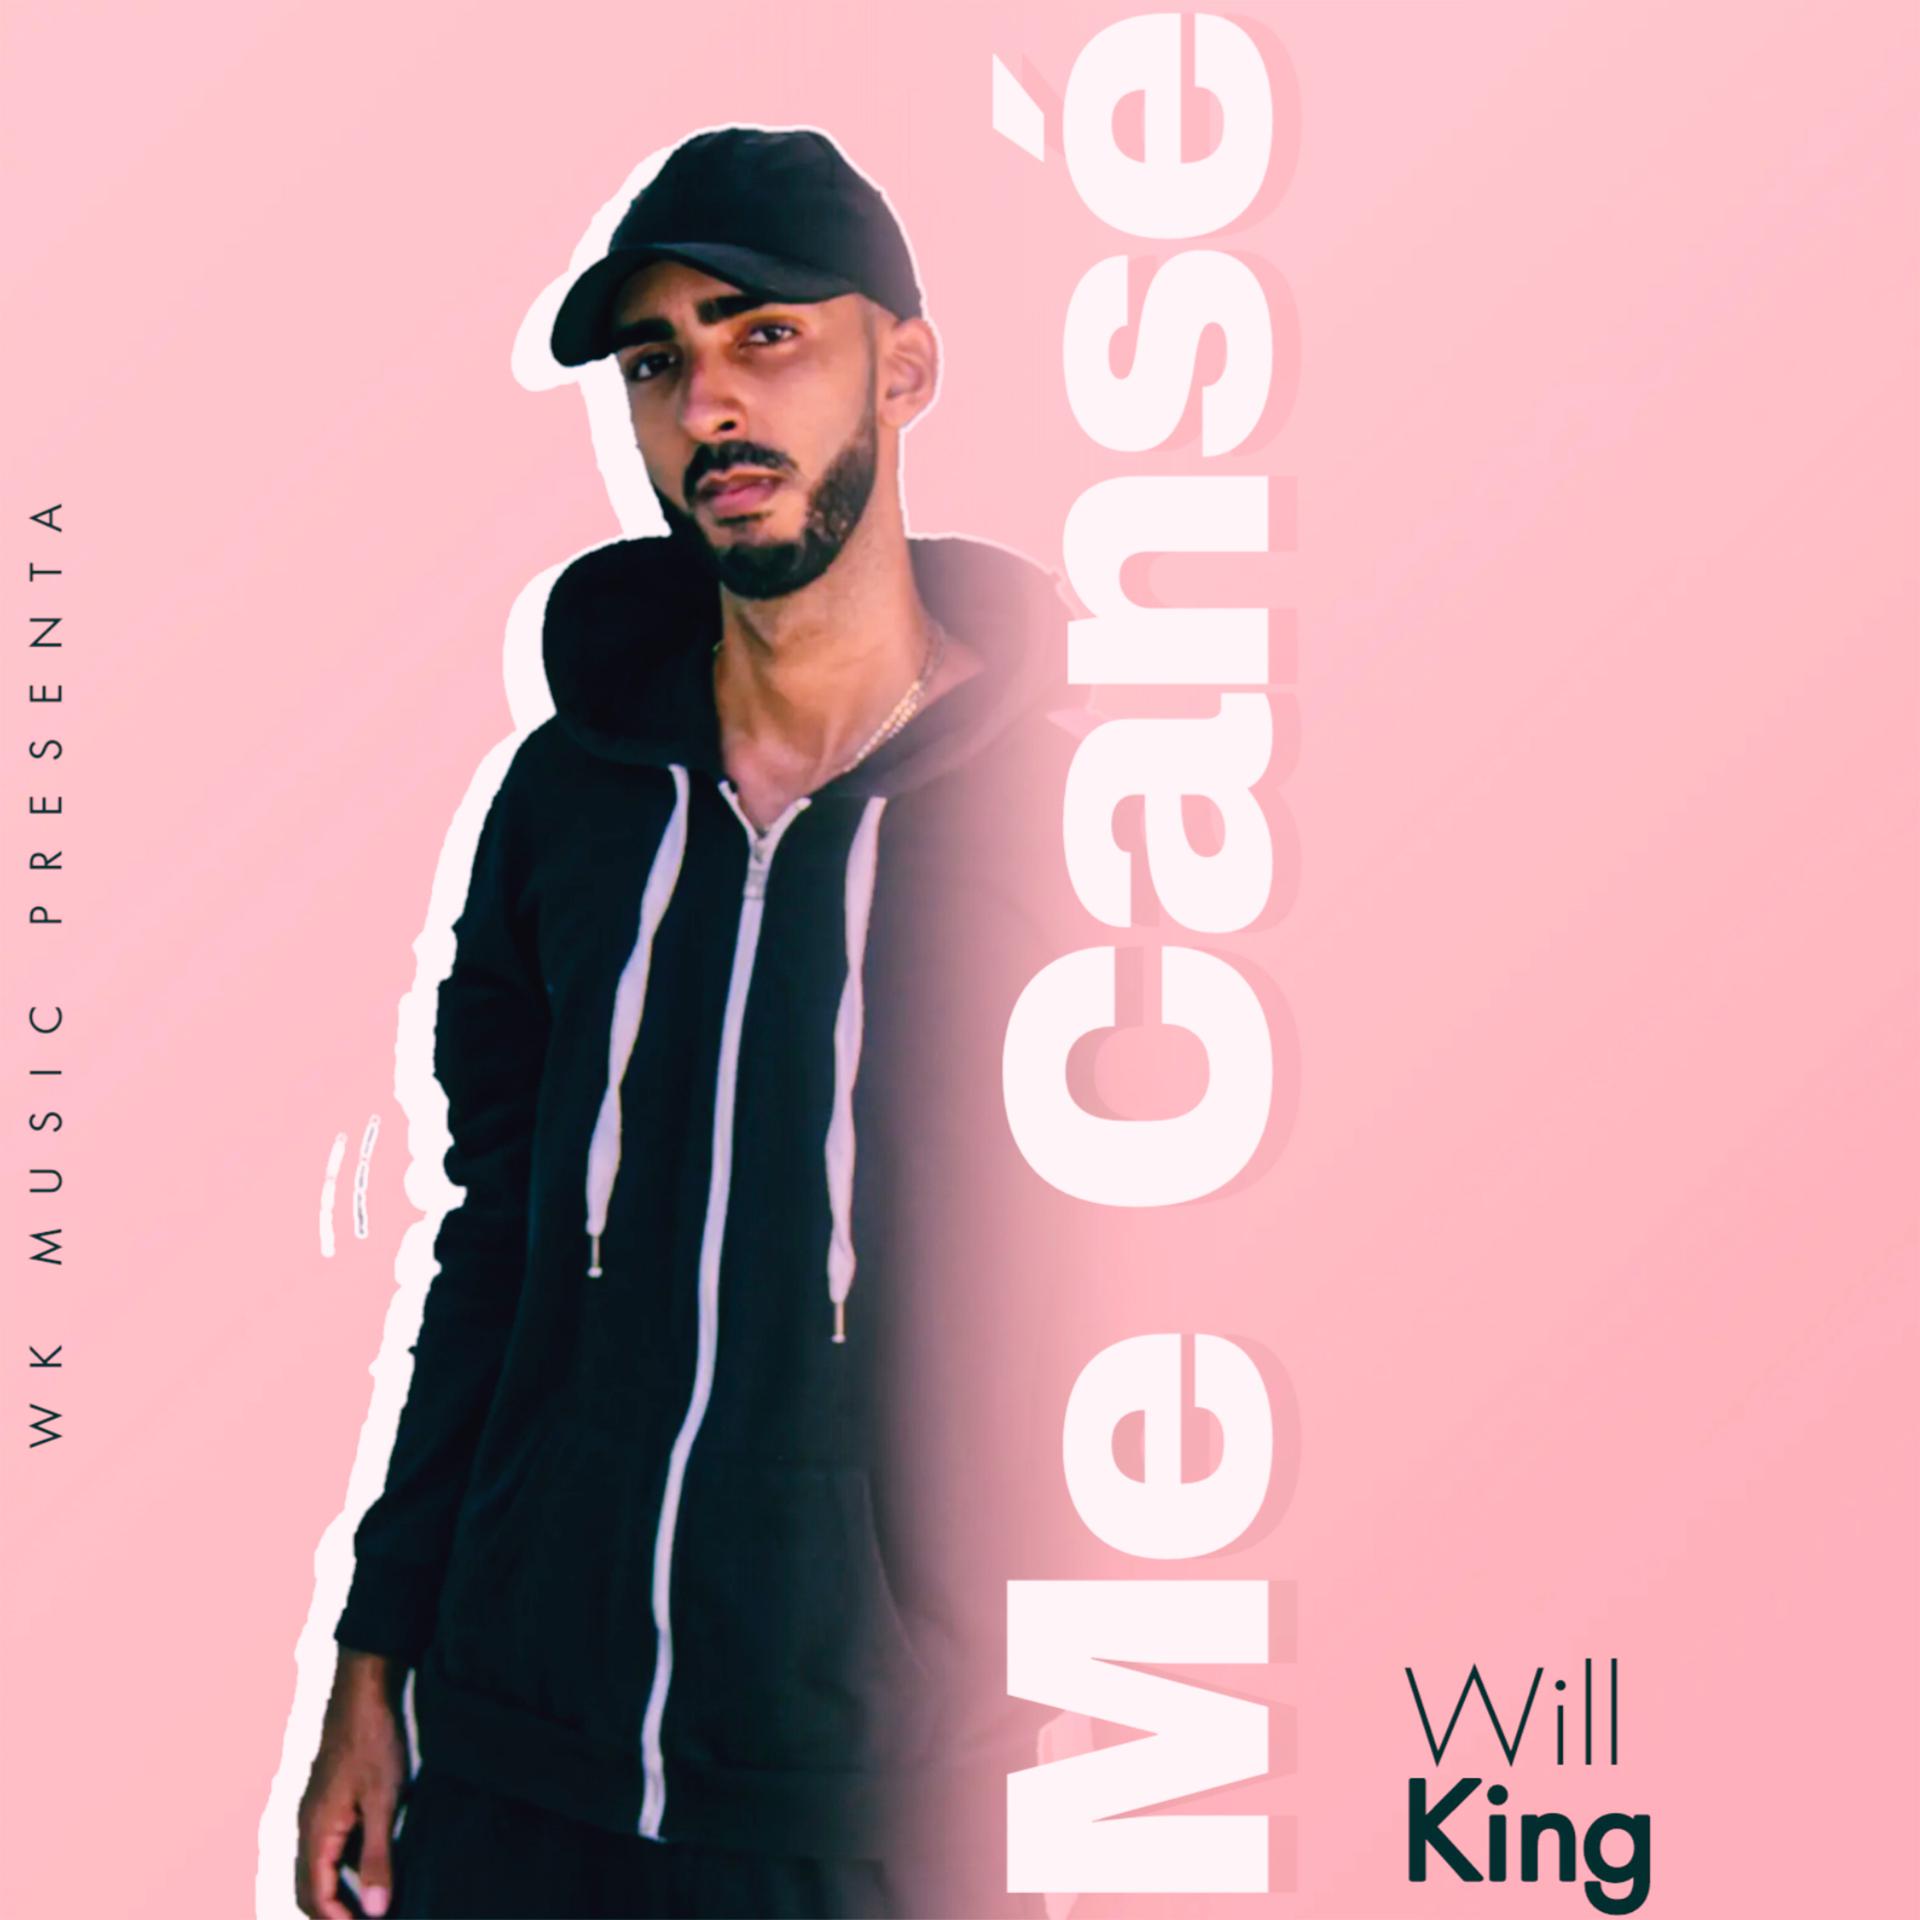 Постер альбома Me Cansé